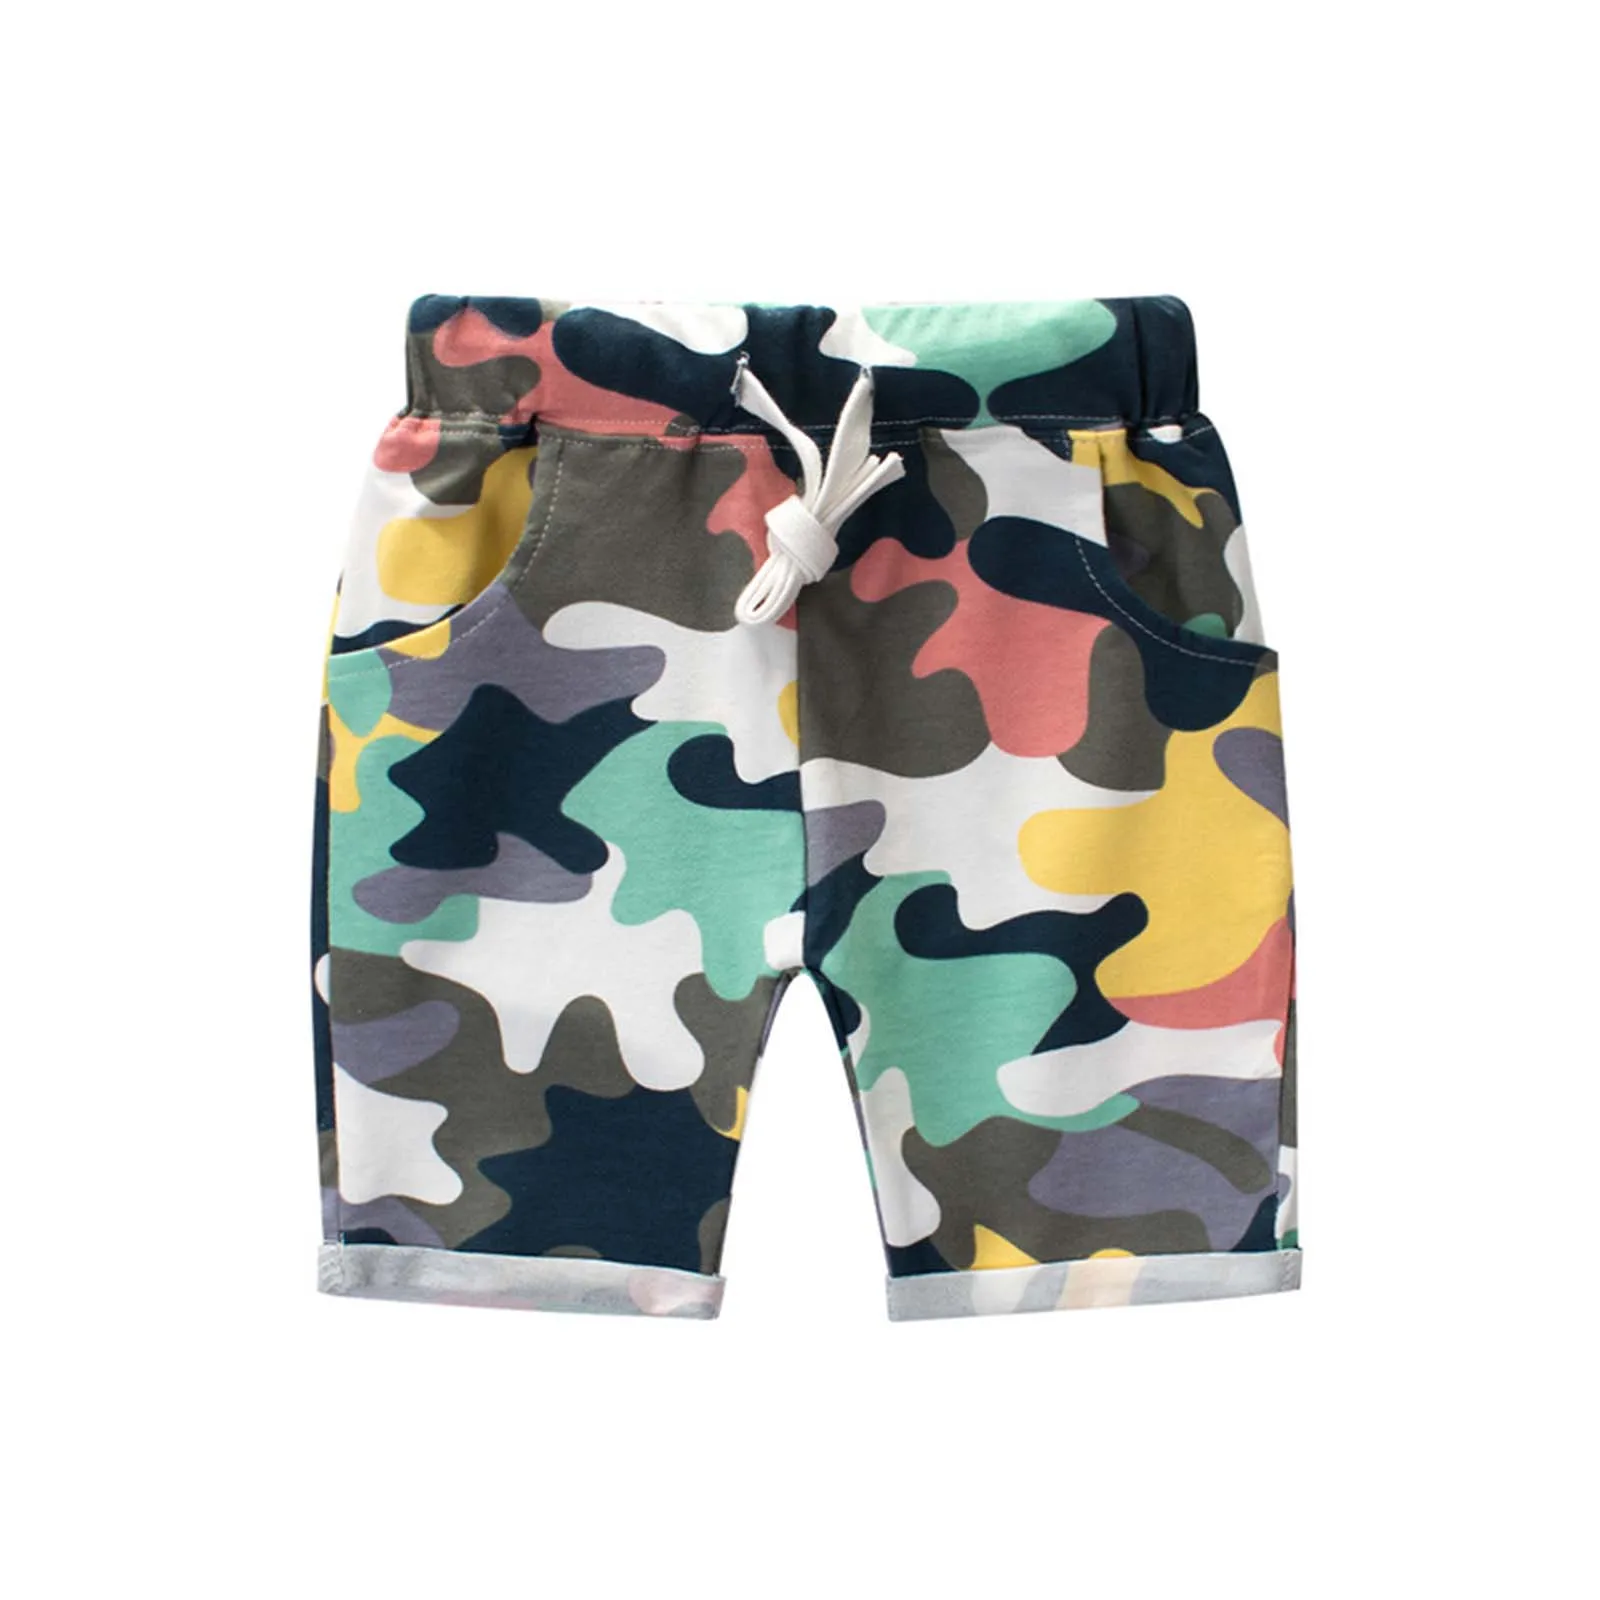 

Kids Boys Fashion Cotton Summer Gym Workout Sport Shorts Camouflage Print Elastic Waistband with Drawstring Slant Pockets Shorts